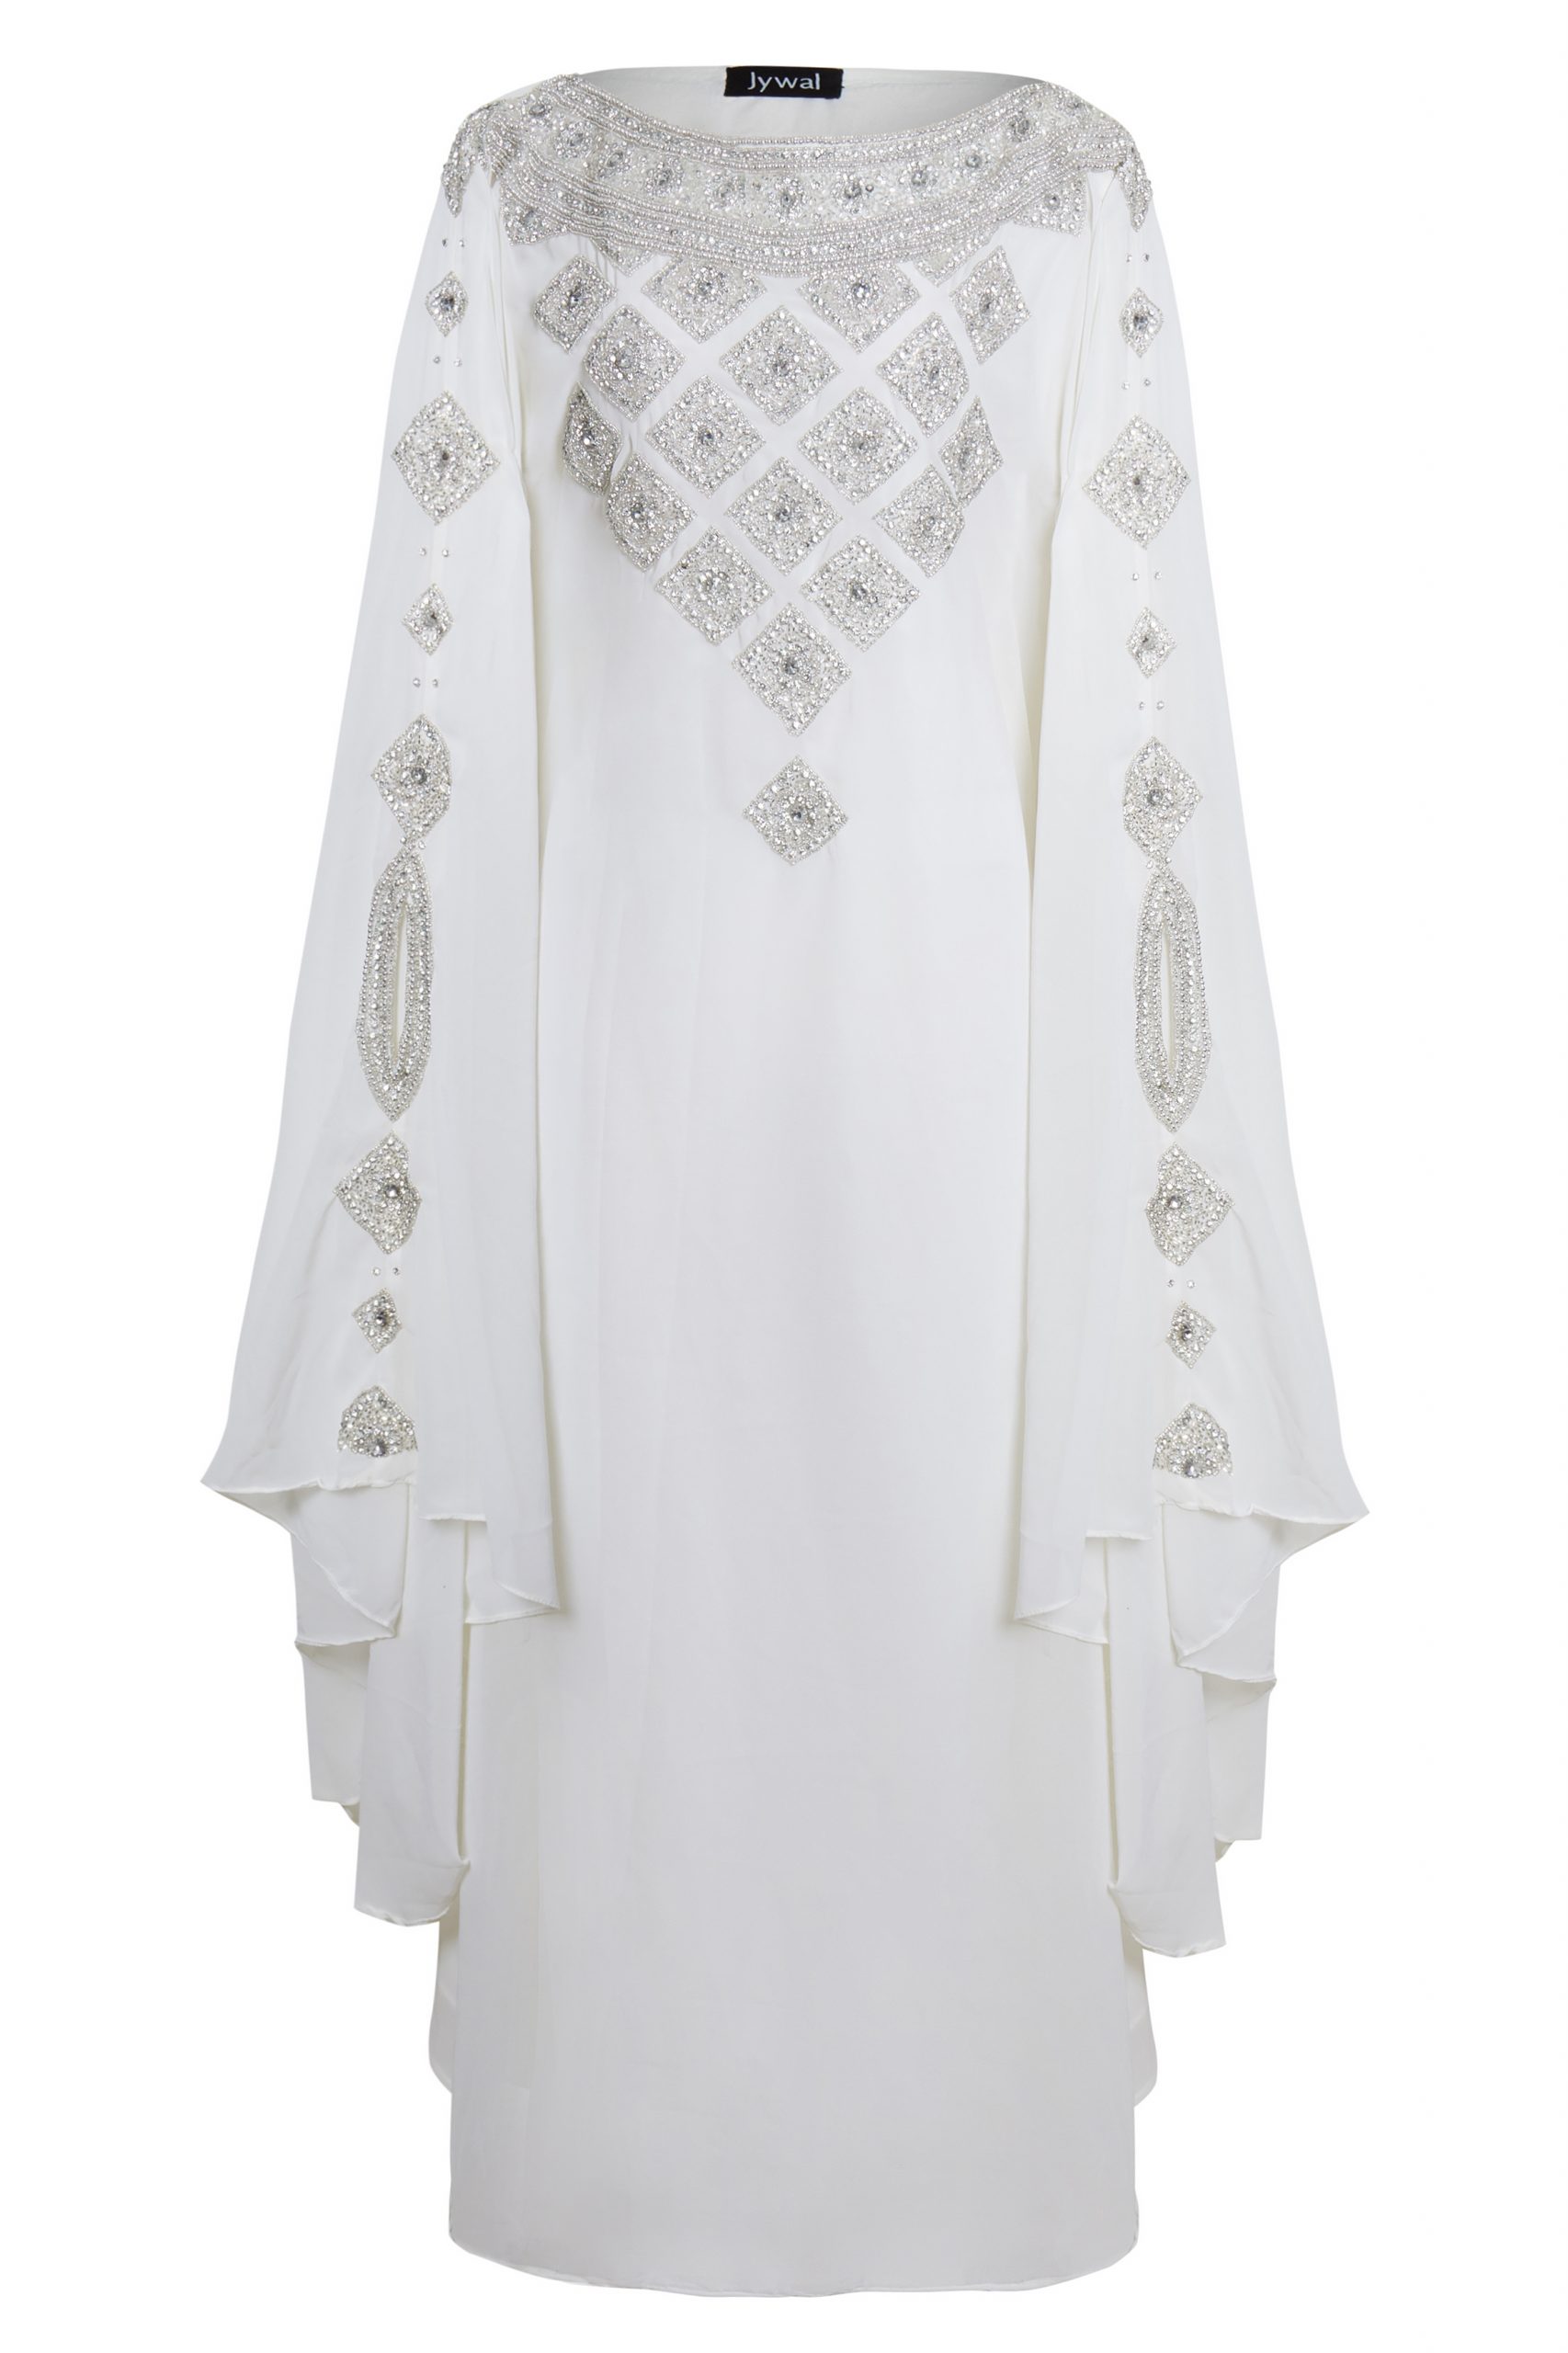 Zora - Embellished Off White Bridal Kaftan Maxi Dress | Jywal London